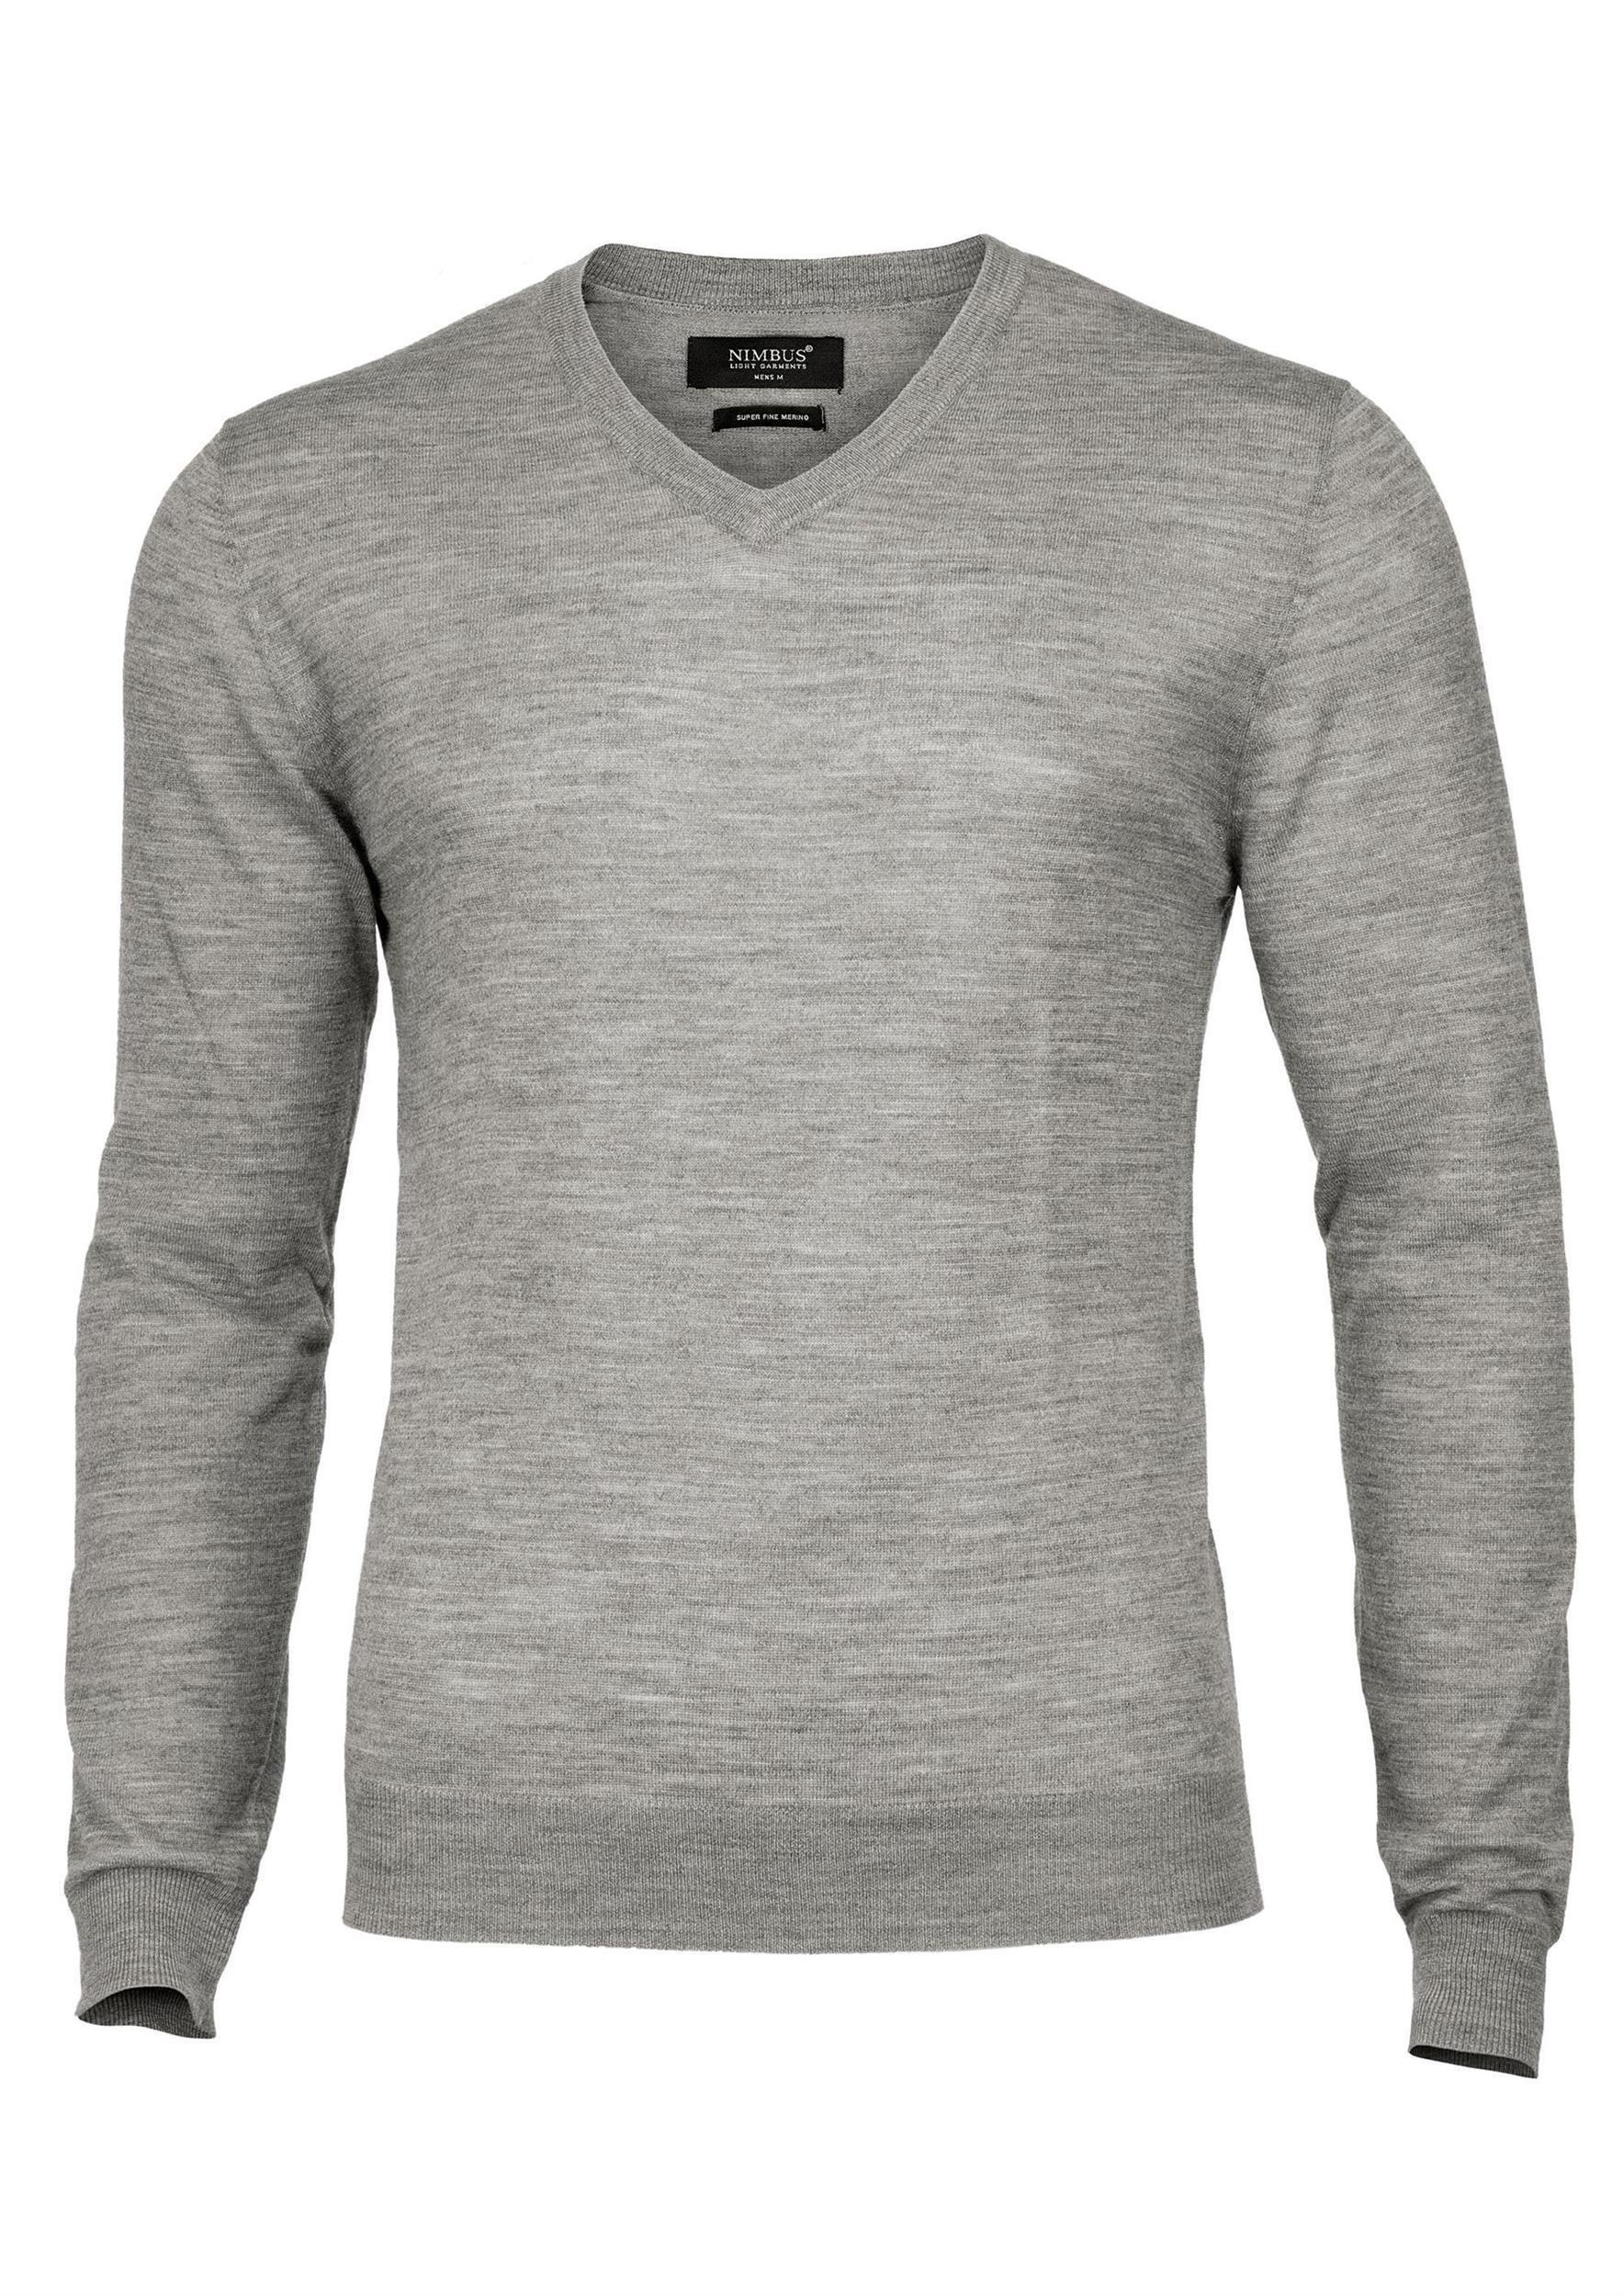 Mens Sweater 155 g/m² Ashbury Nimbus®